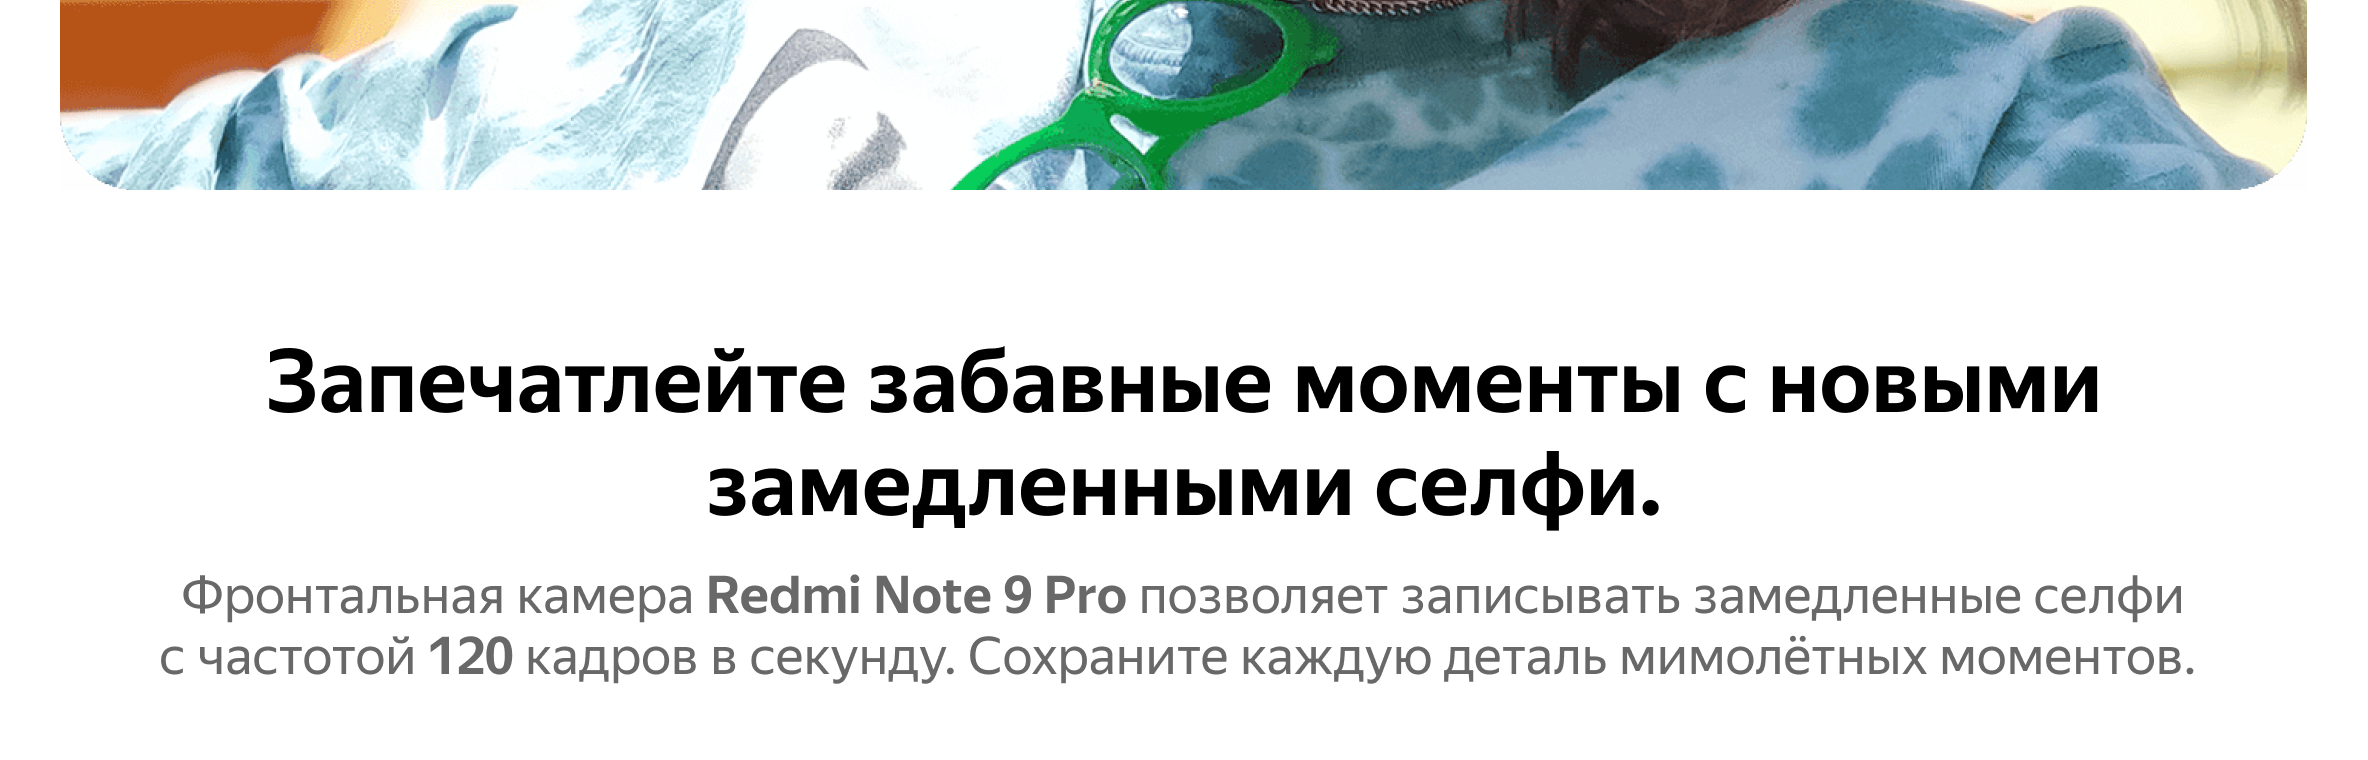 Redmi Note 9 Pro 6/128 Gb kulrang - paragraf.uz